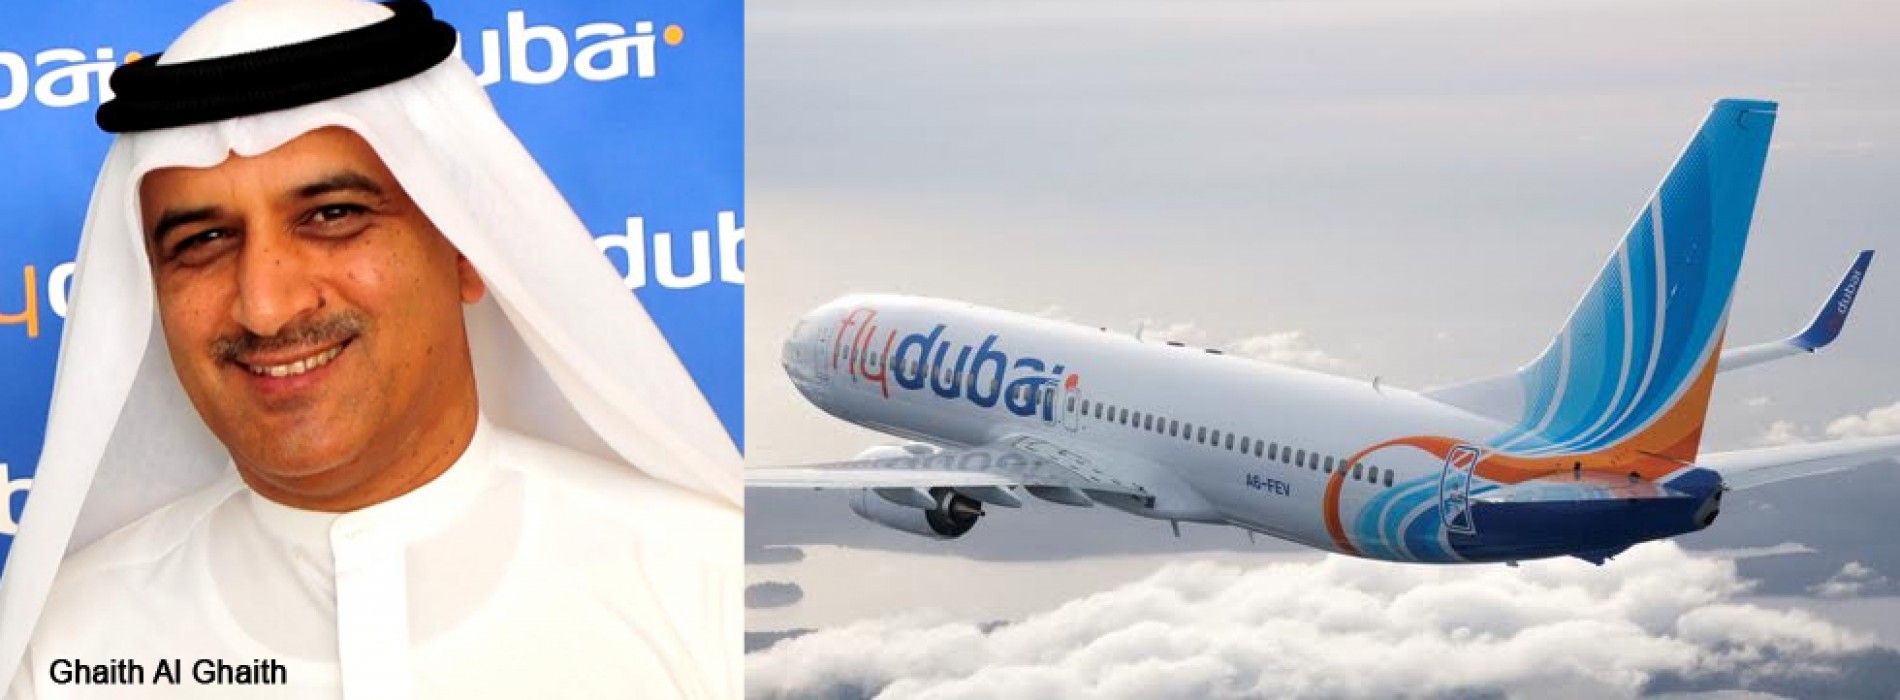 flydubai announces 14.4% passenger growth to 10.4 million and profit of AED 31.6 million